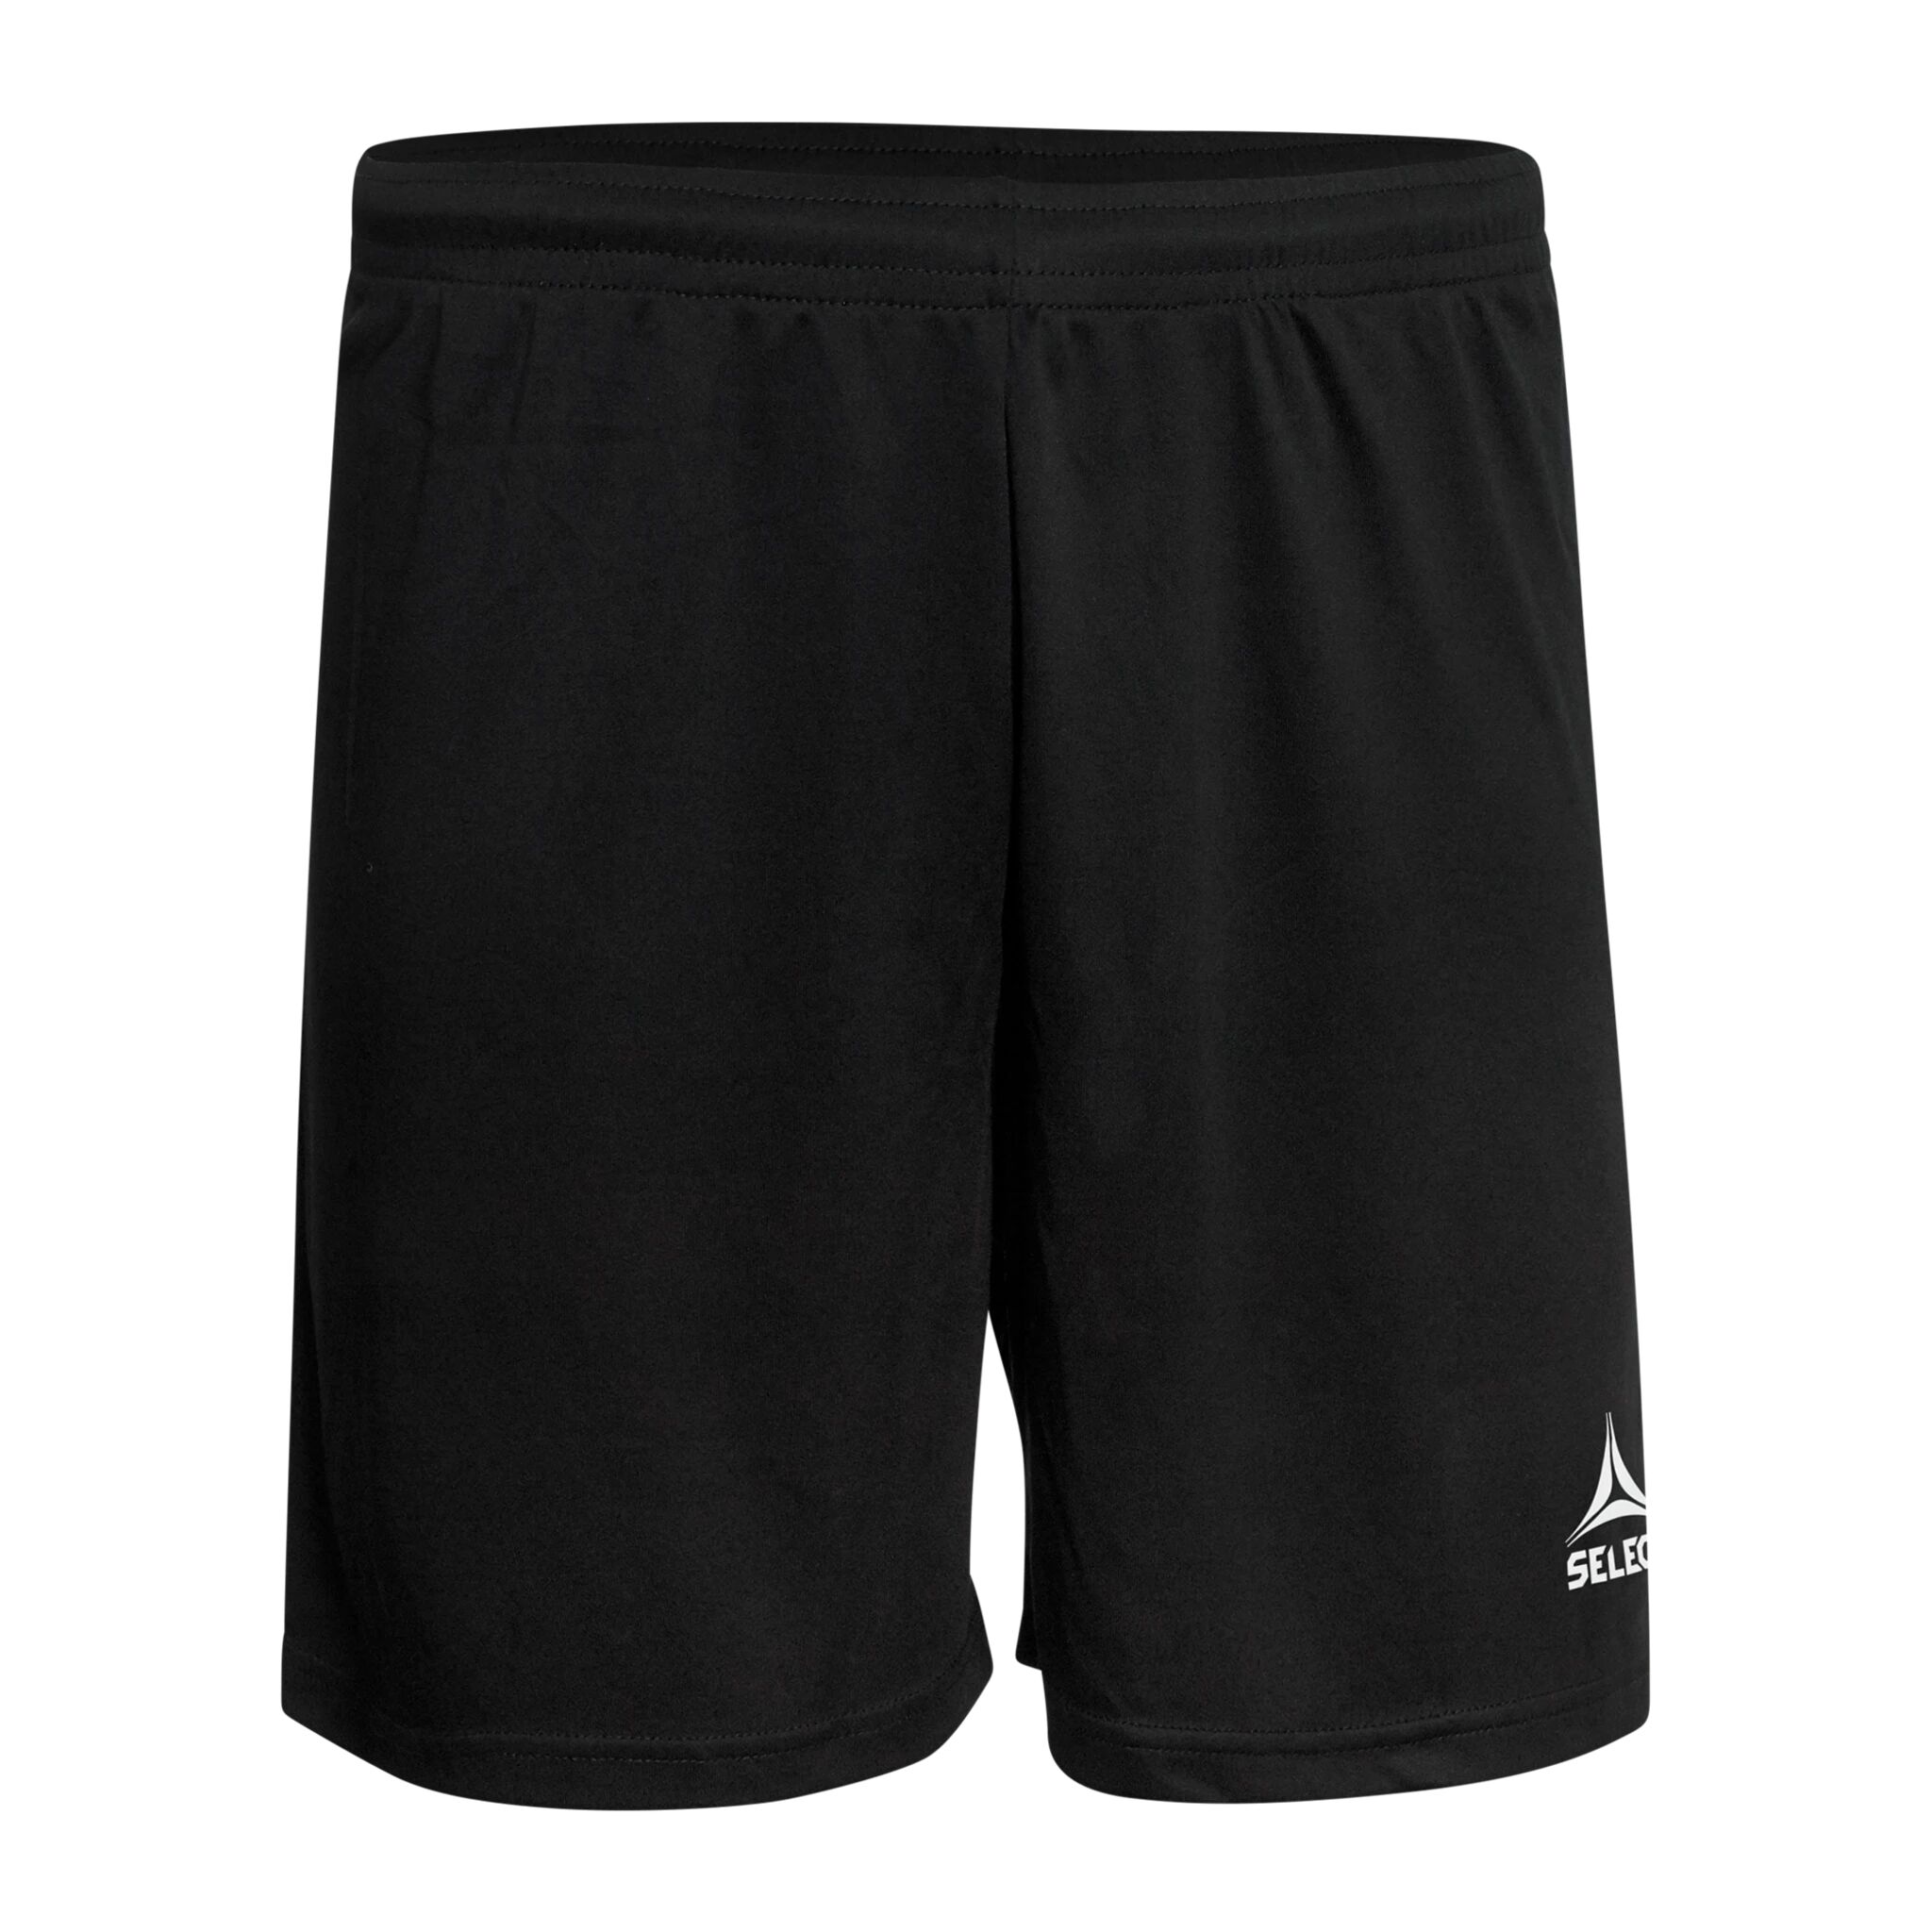 Select Player shorts Pisa, shorts senior 116 BLACK